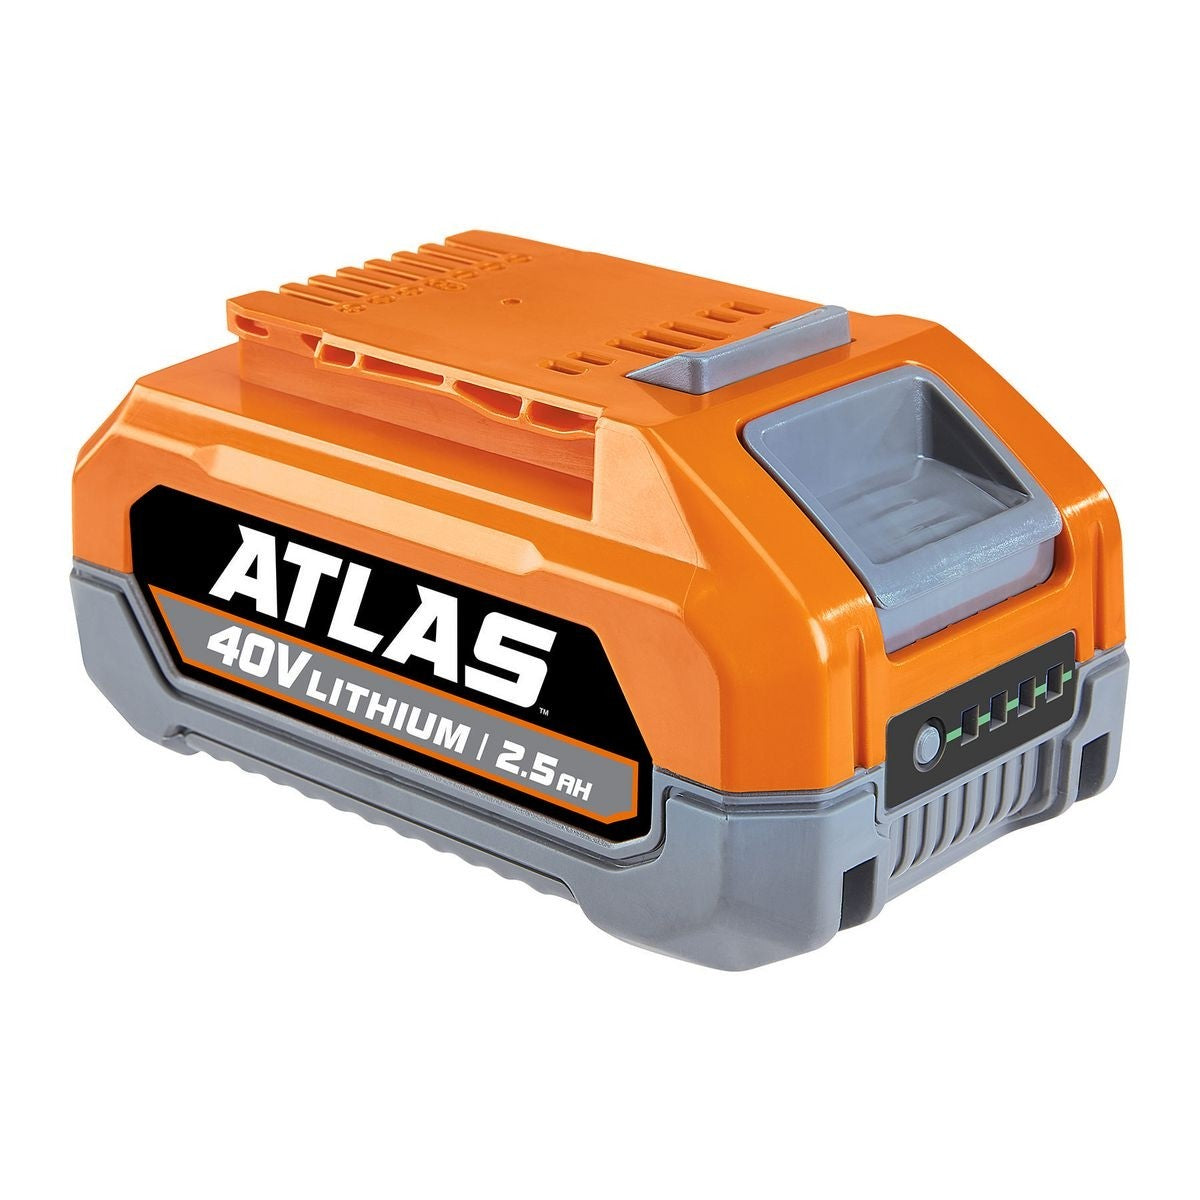 Batterie ATLAS 40v lithium, 2.5AH - sosoutils